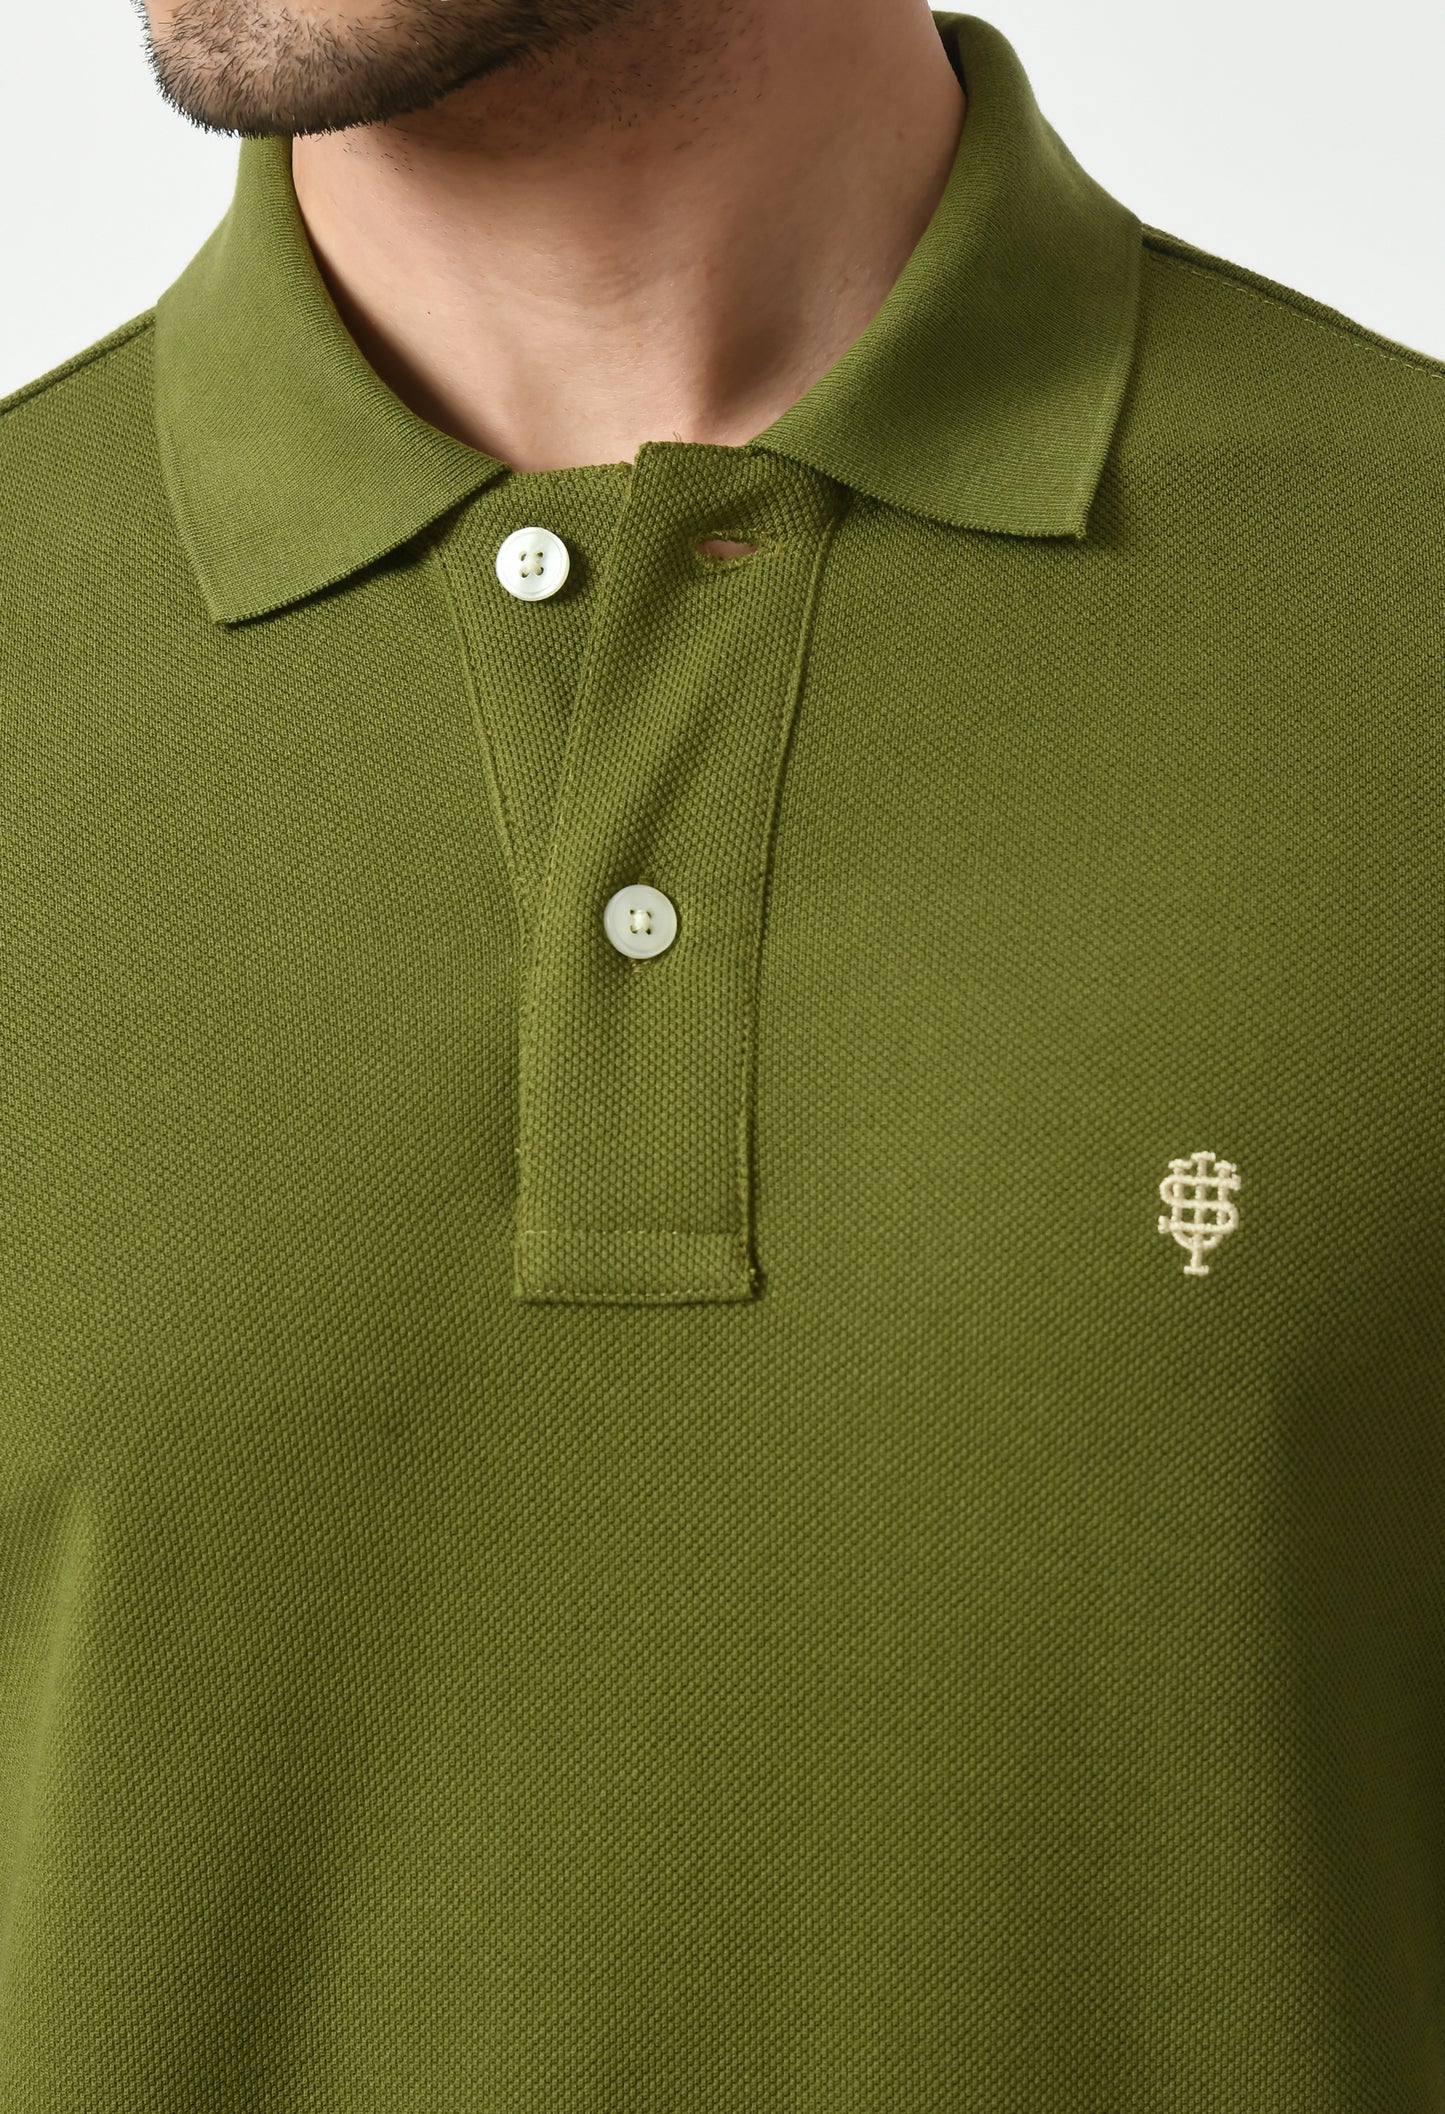 Concept 11 Full sleeve | Premium Polo for Men | Forest green